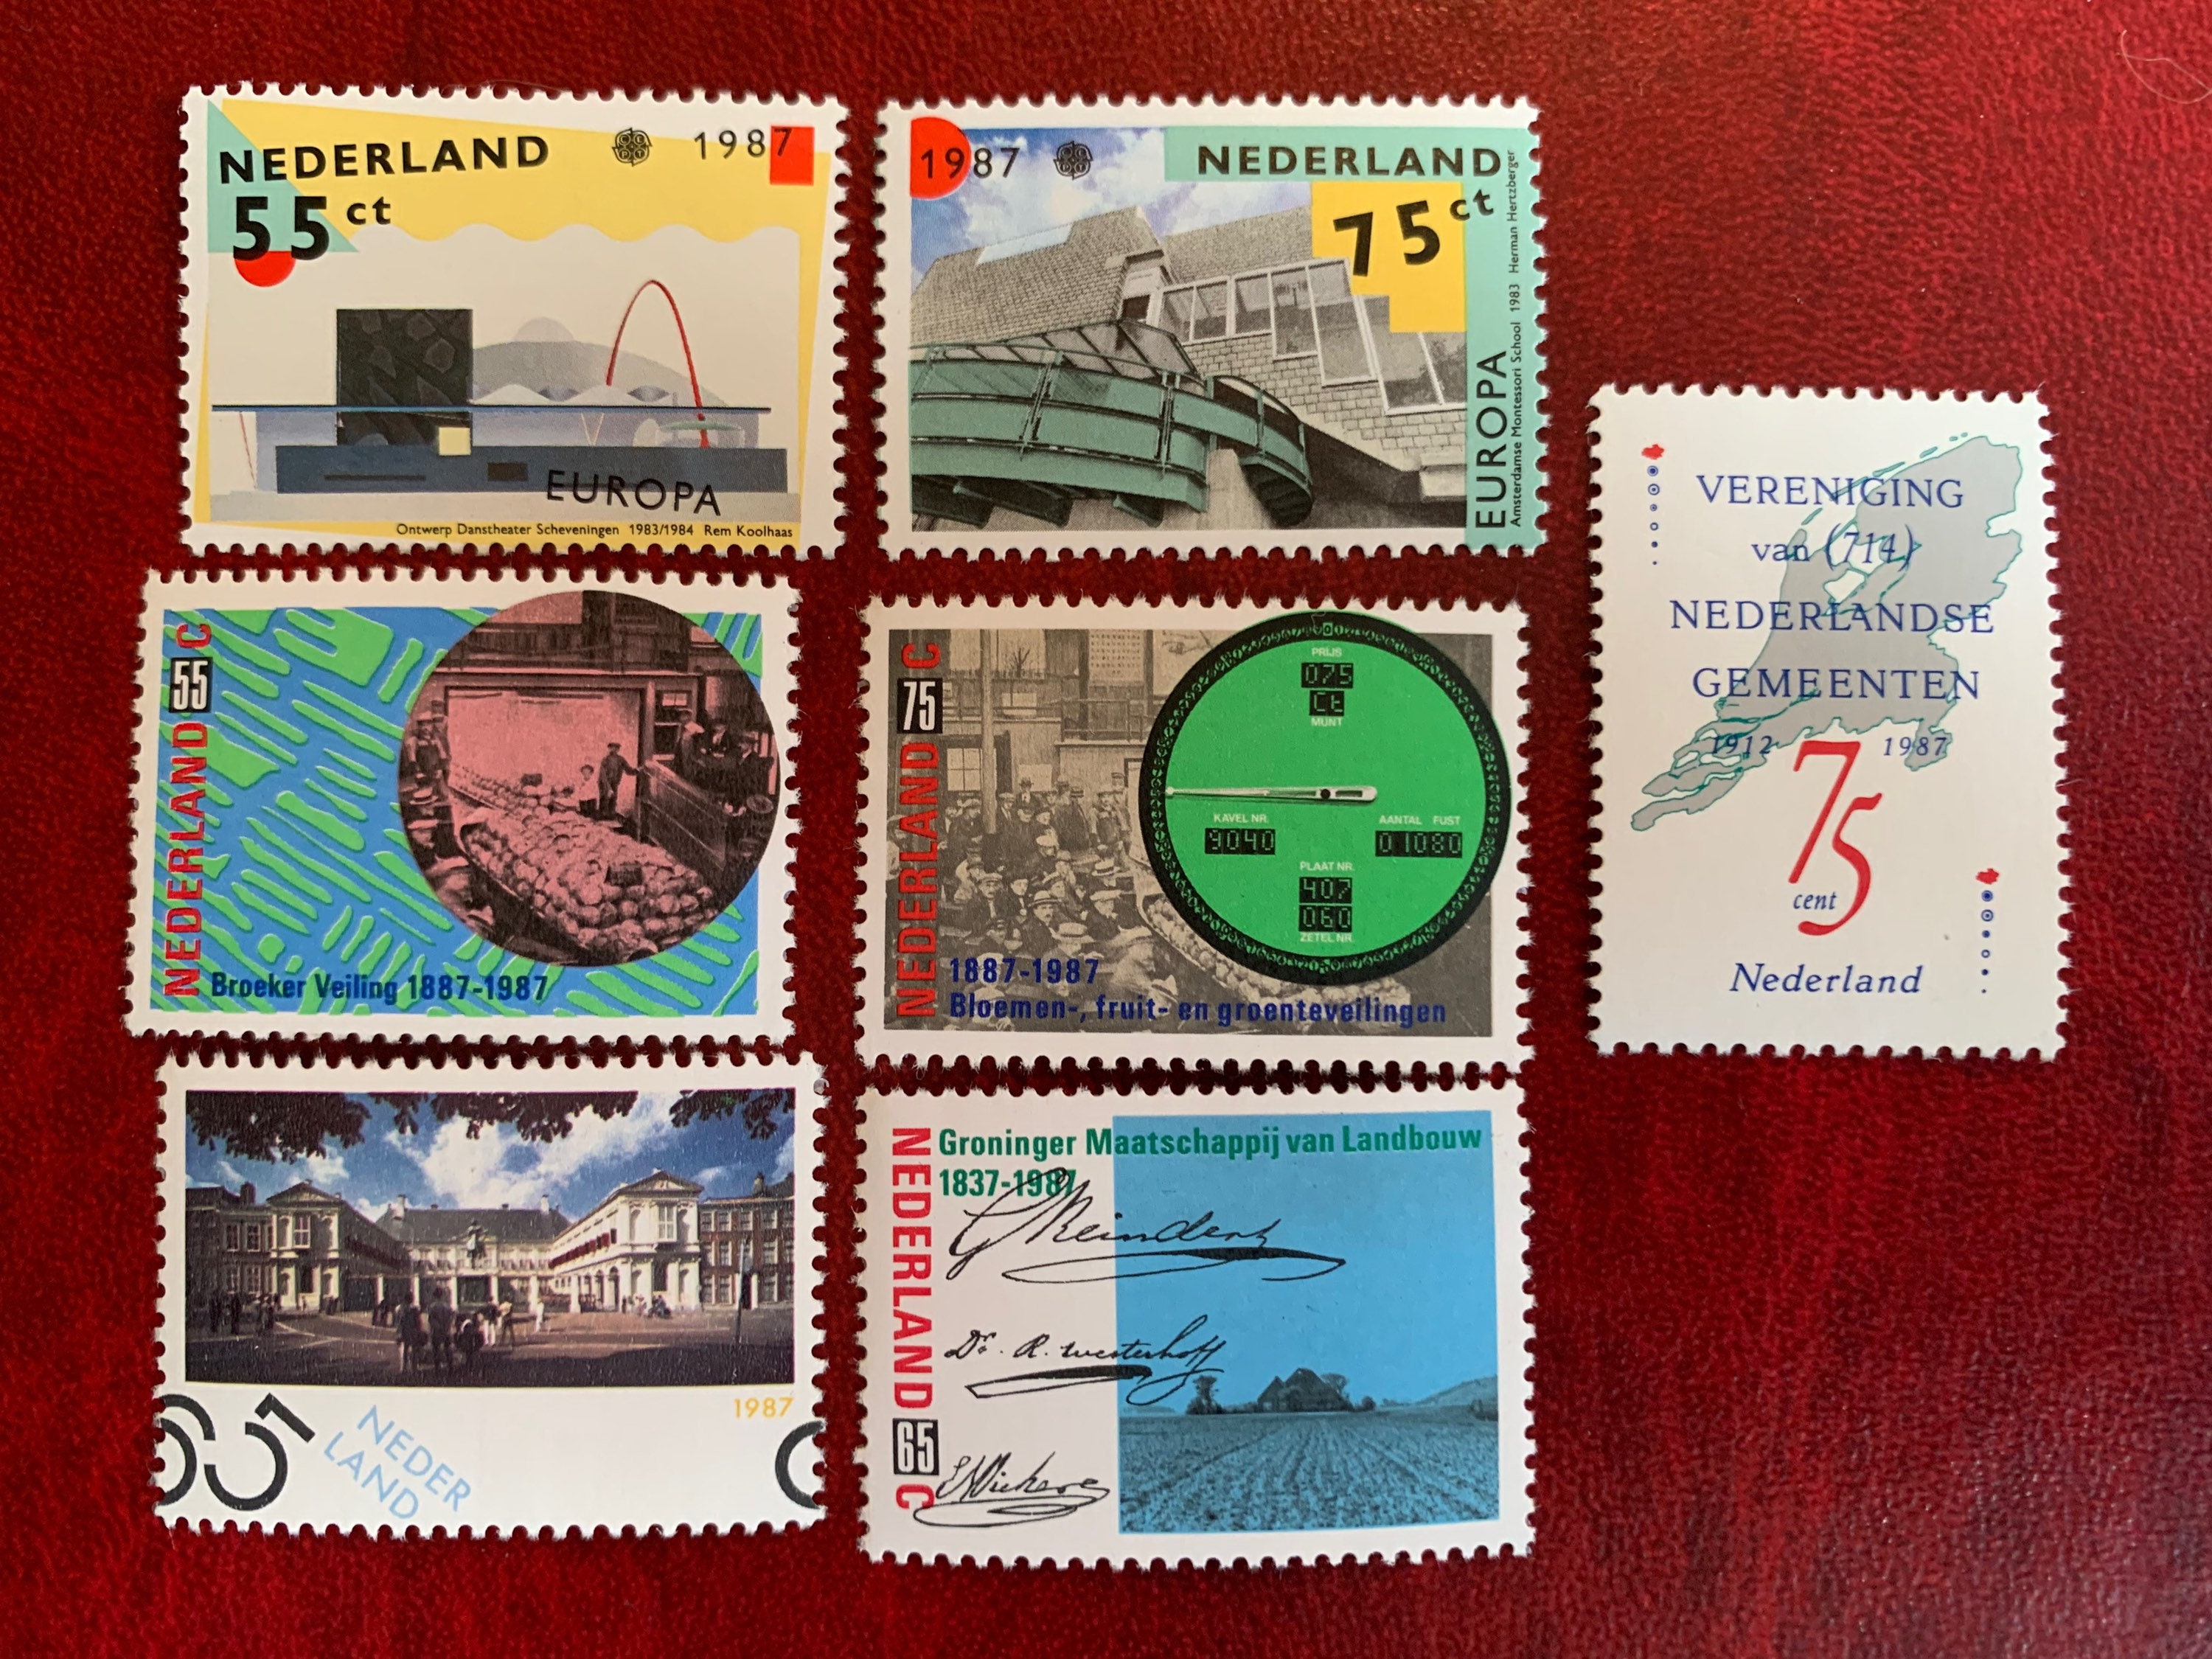 20 NETHERLANDS Vintage Postage Stamps for Collectors or Crafting